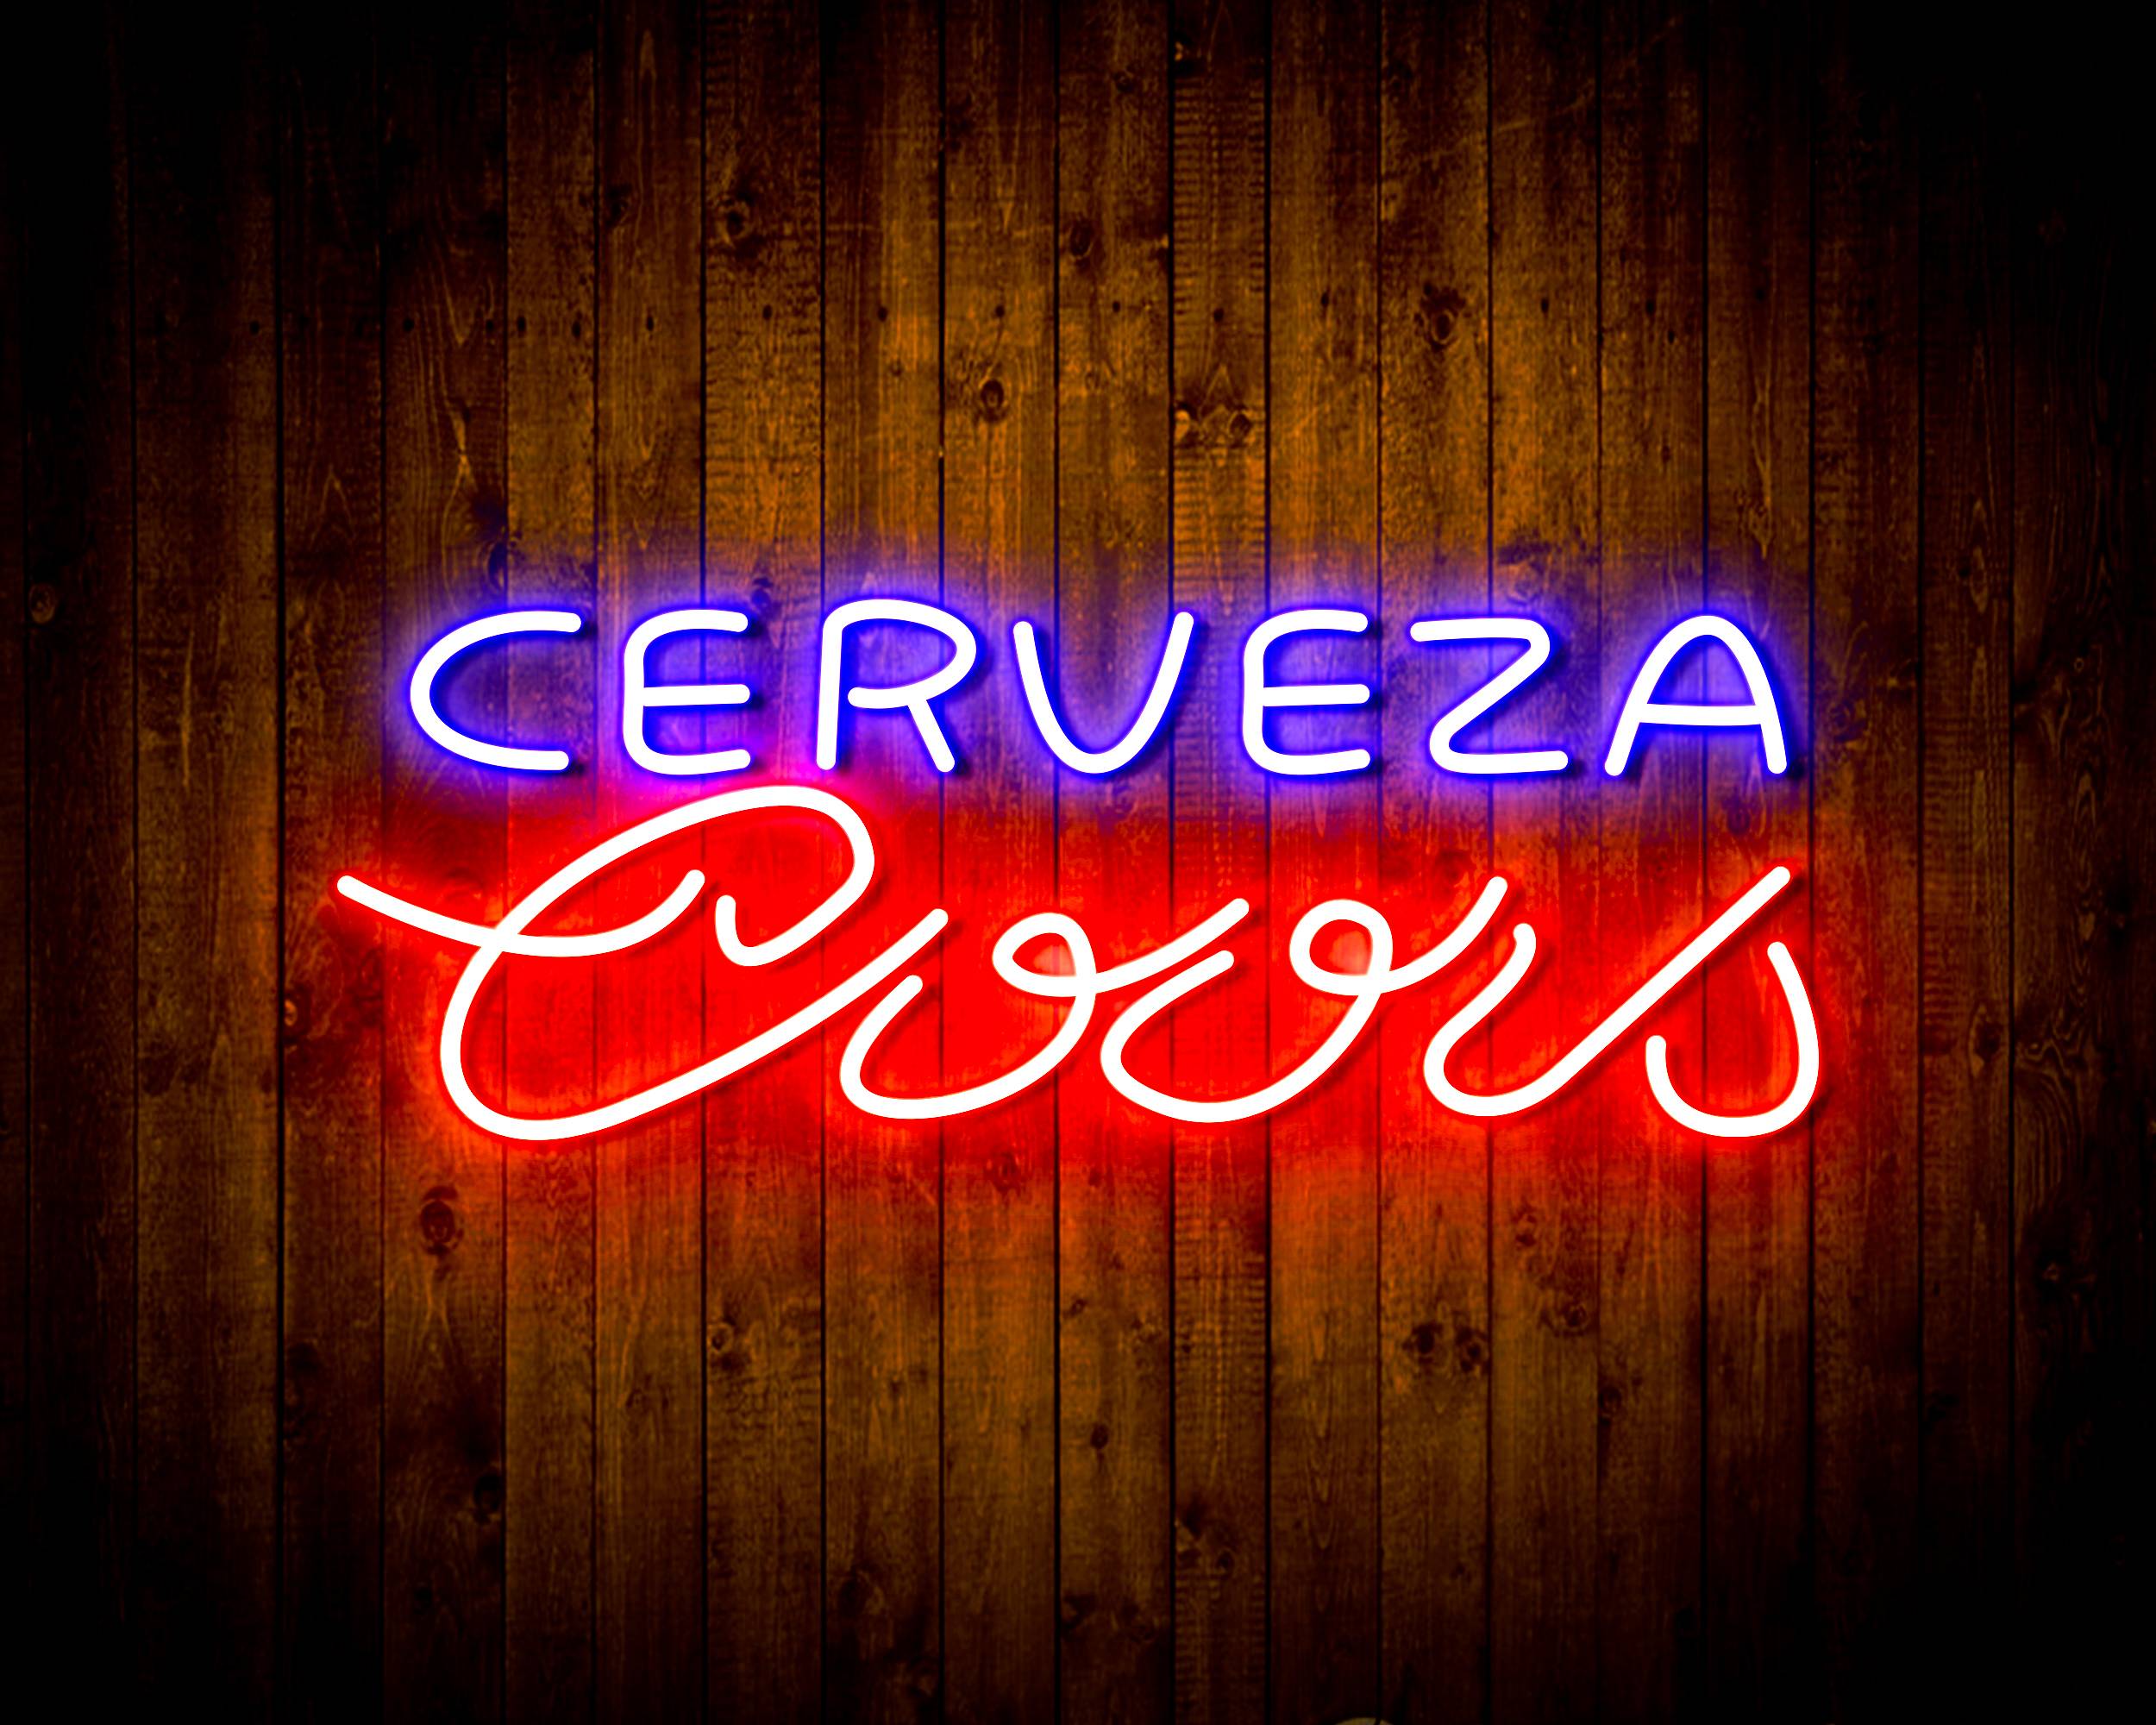 Cerveza Coors Handmade LED Neon Light Sign